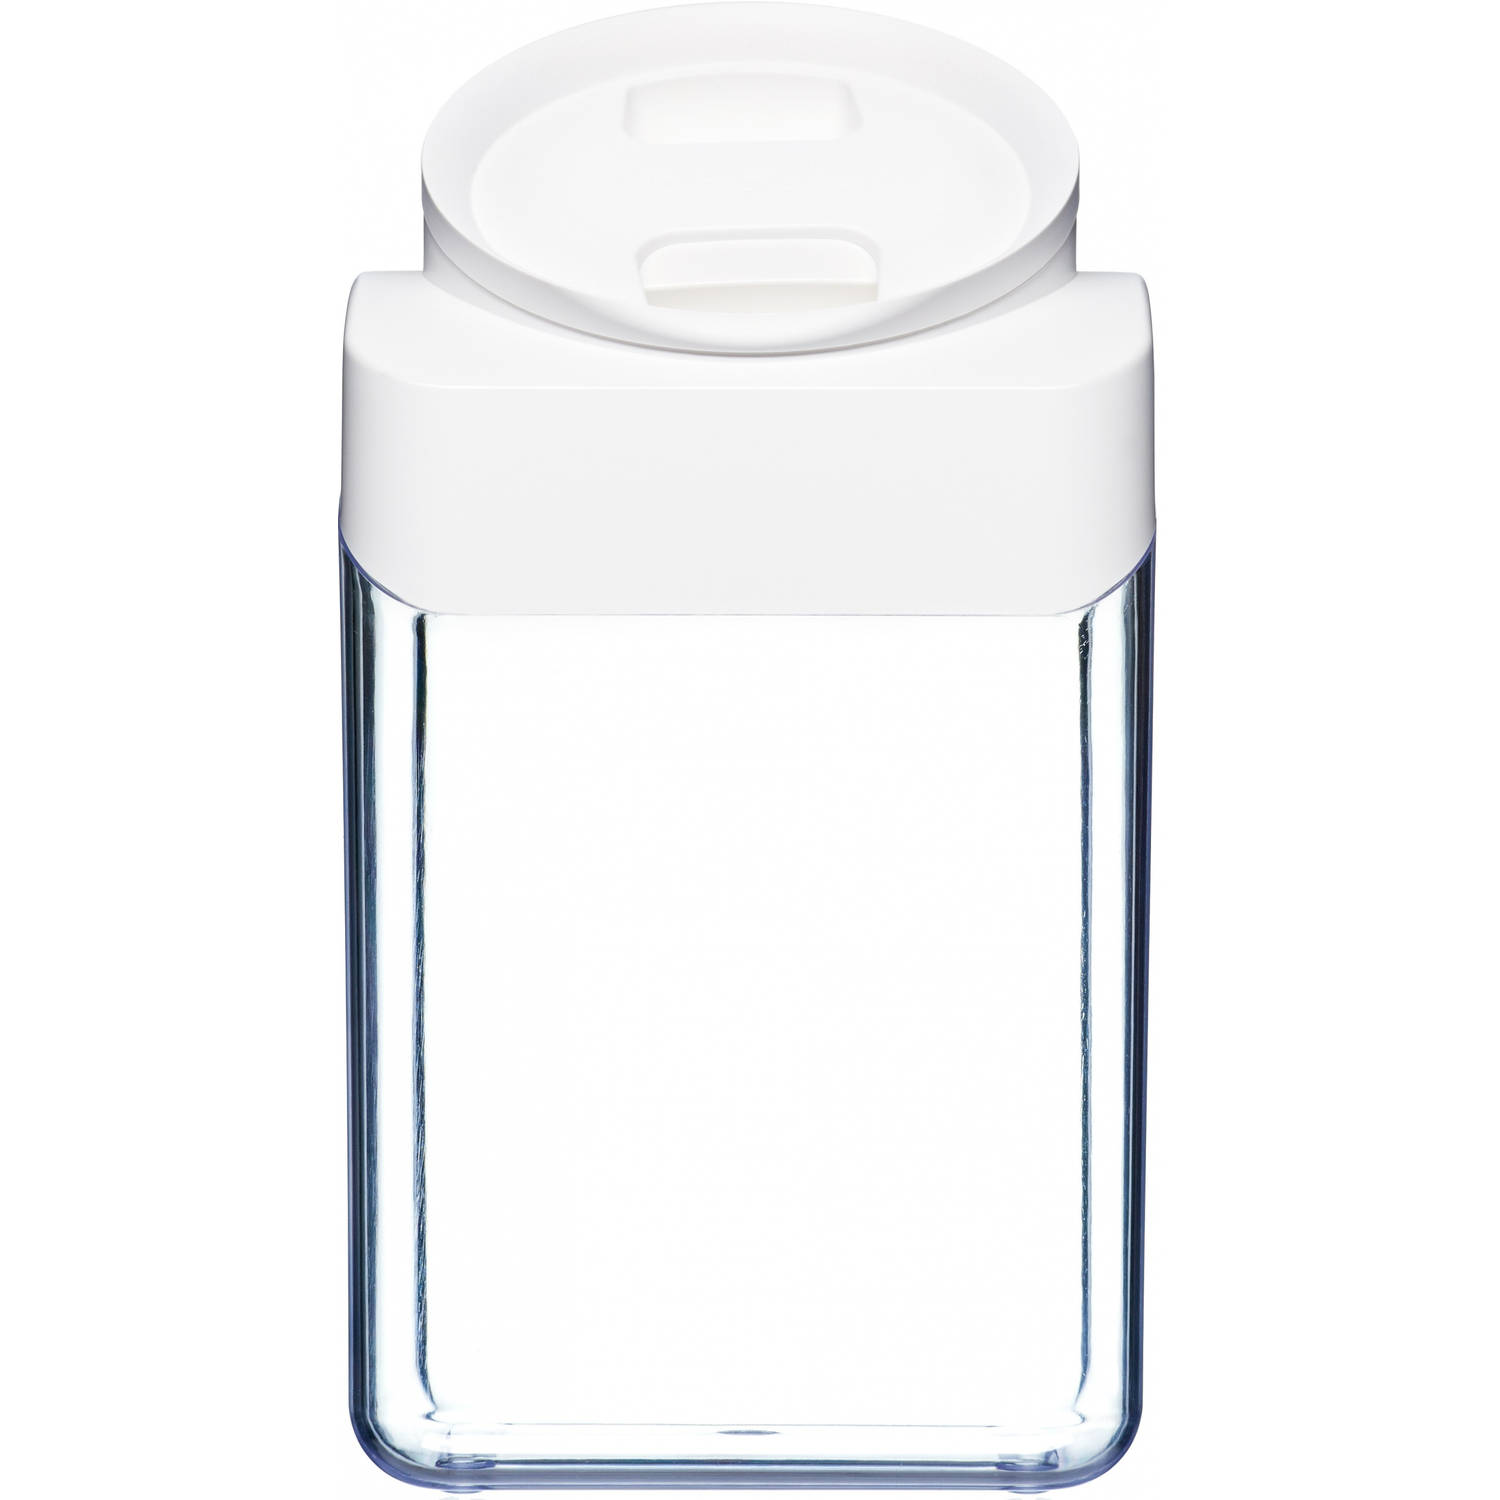 ClickClack vershoudbox Pantry Round 4,2 liter polycarbonaat wit